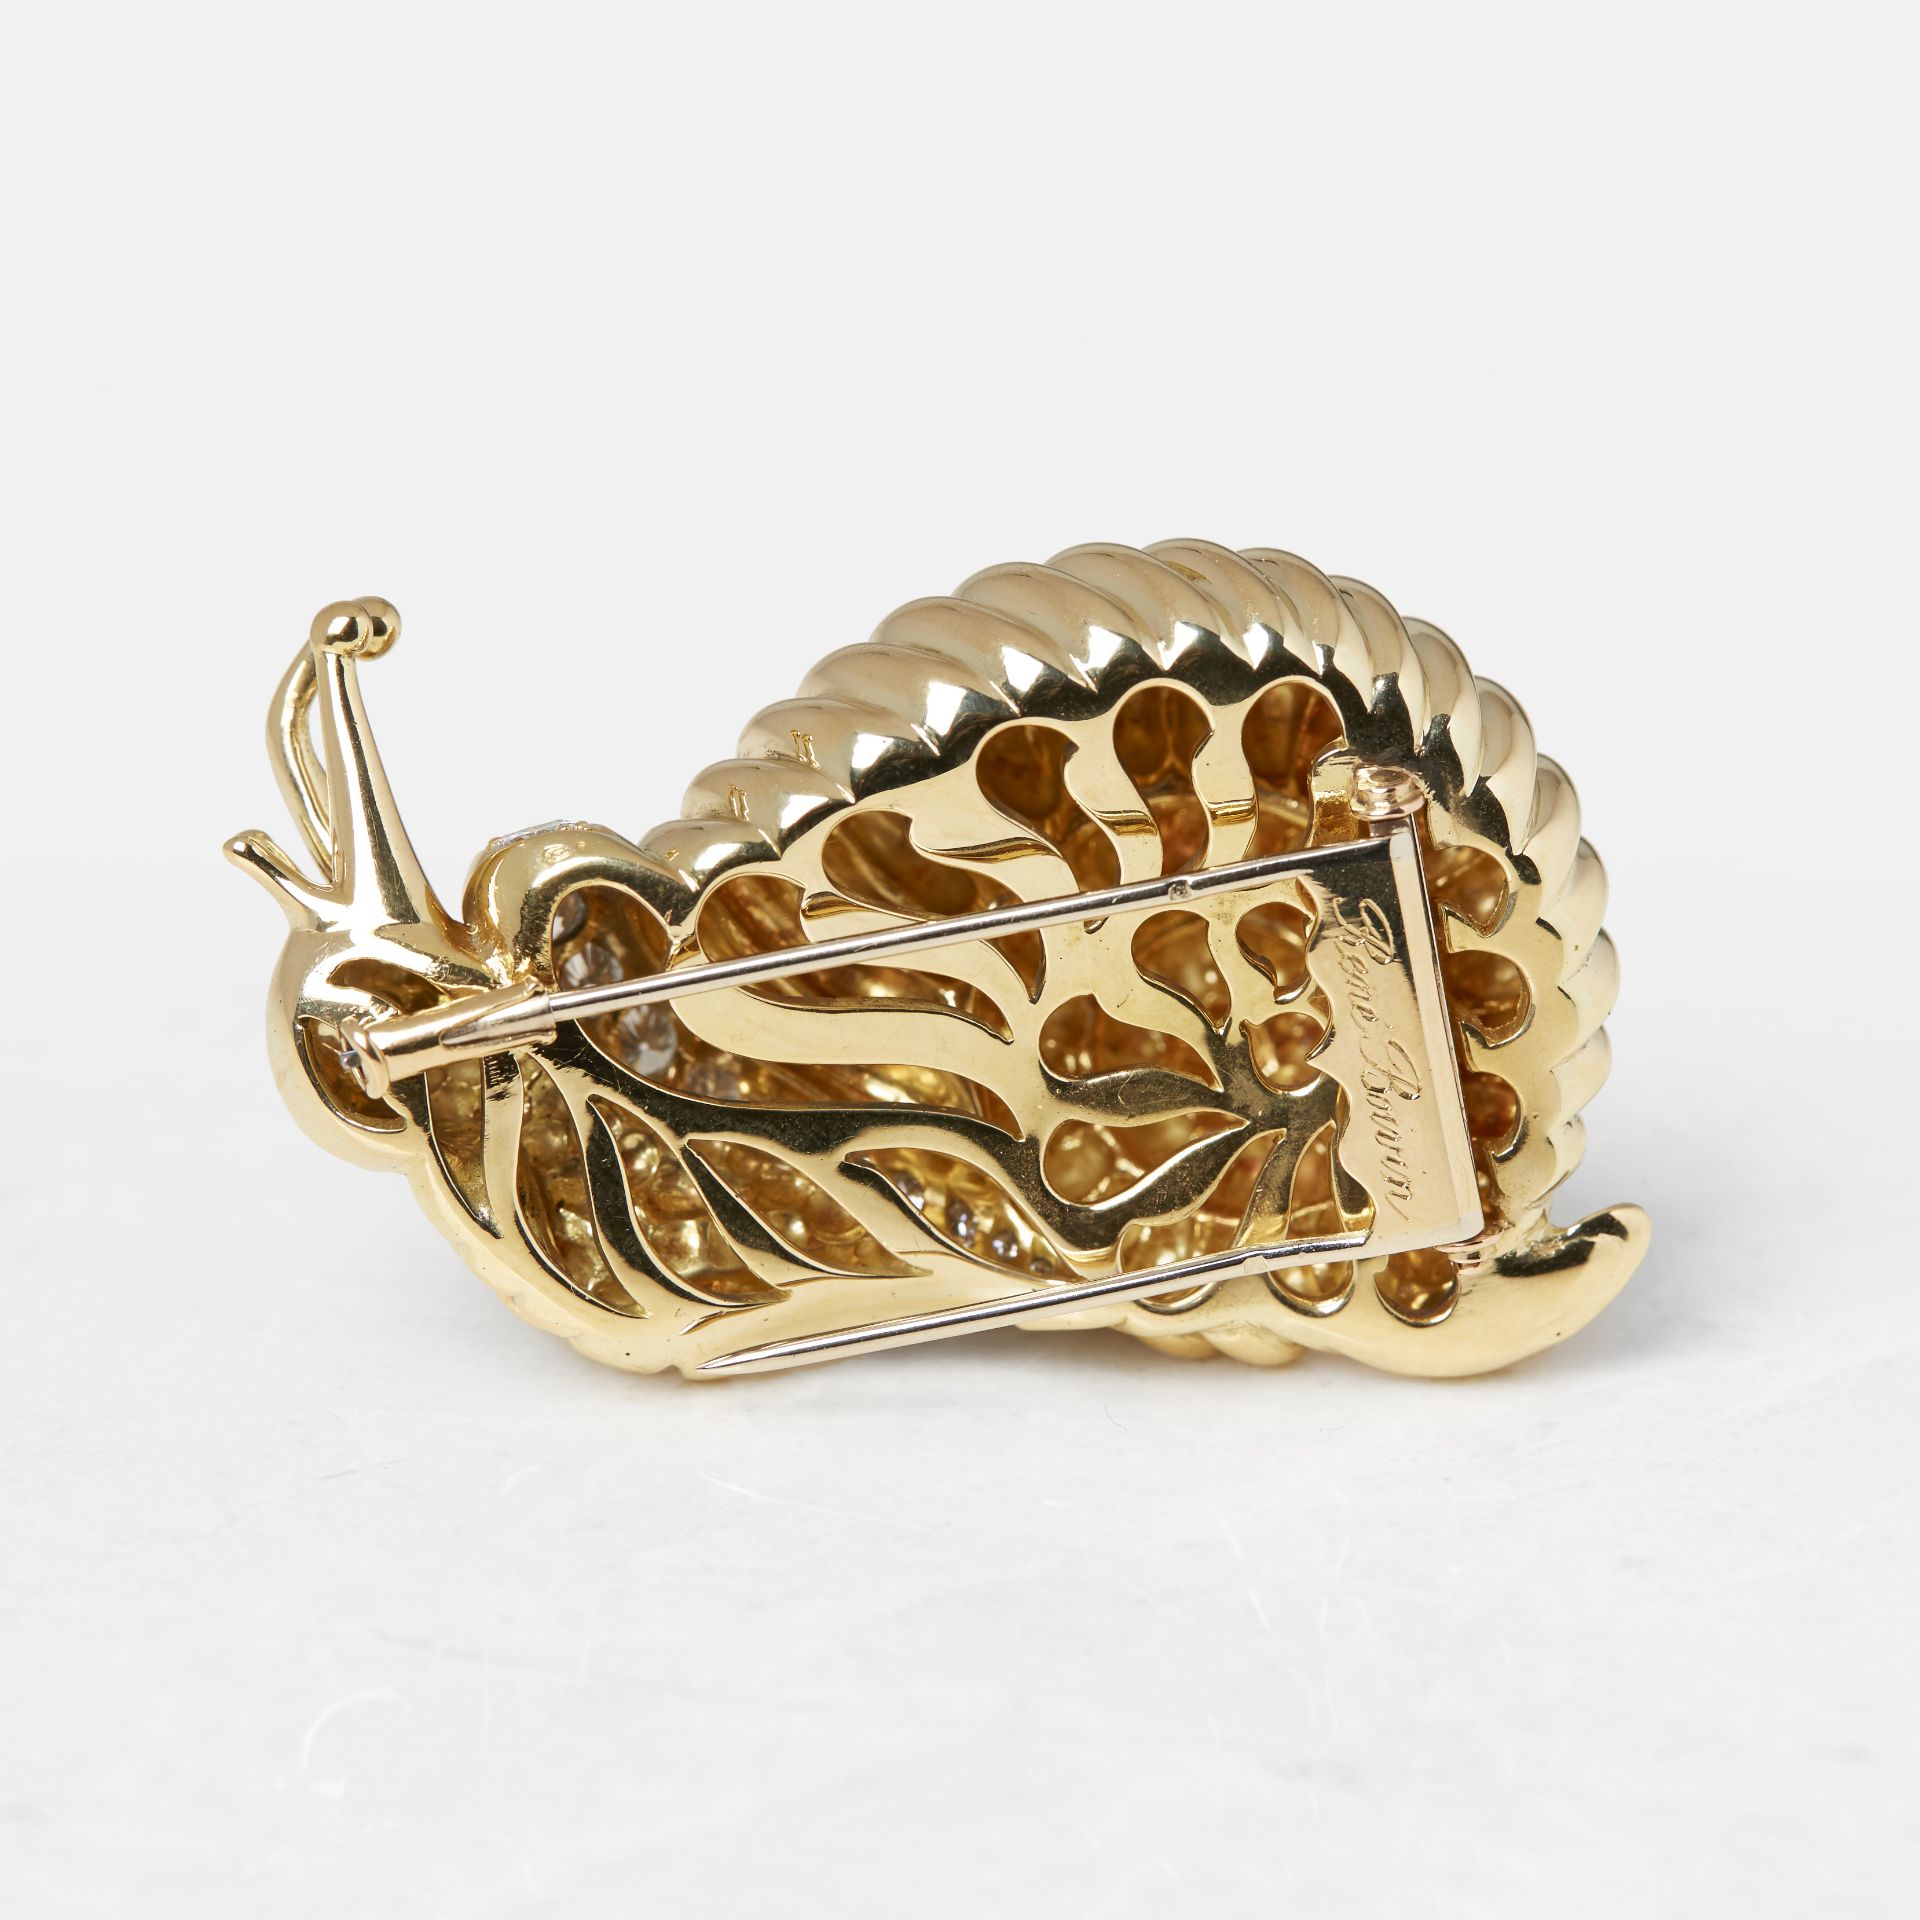 Rene Boivin 18k Yellow Gold Diamond Snail Brooch with Presentation Box - Image 4 of 19